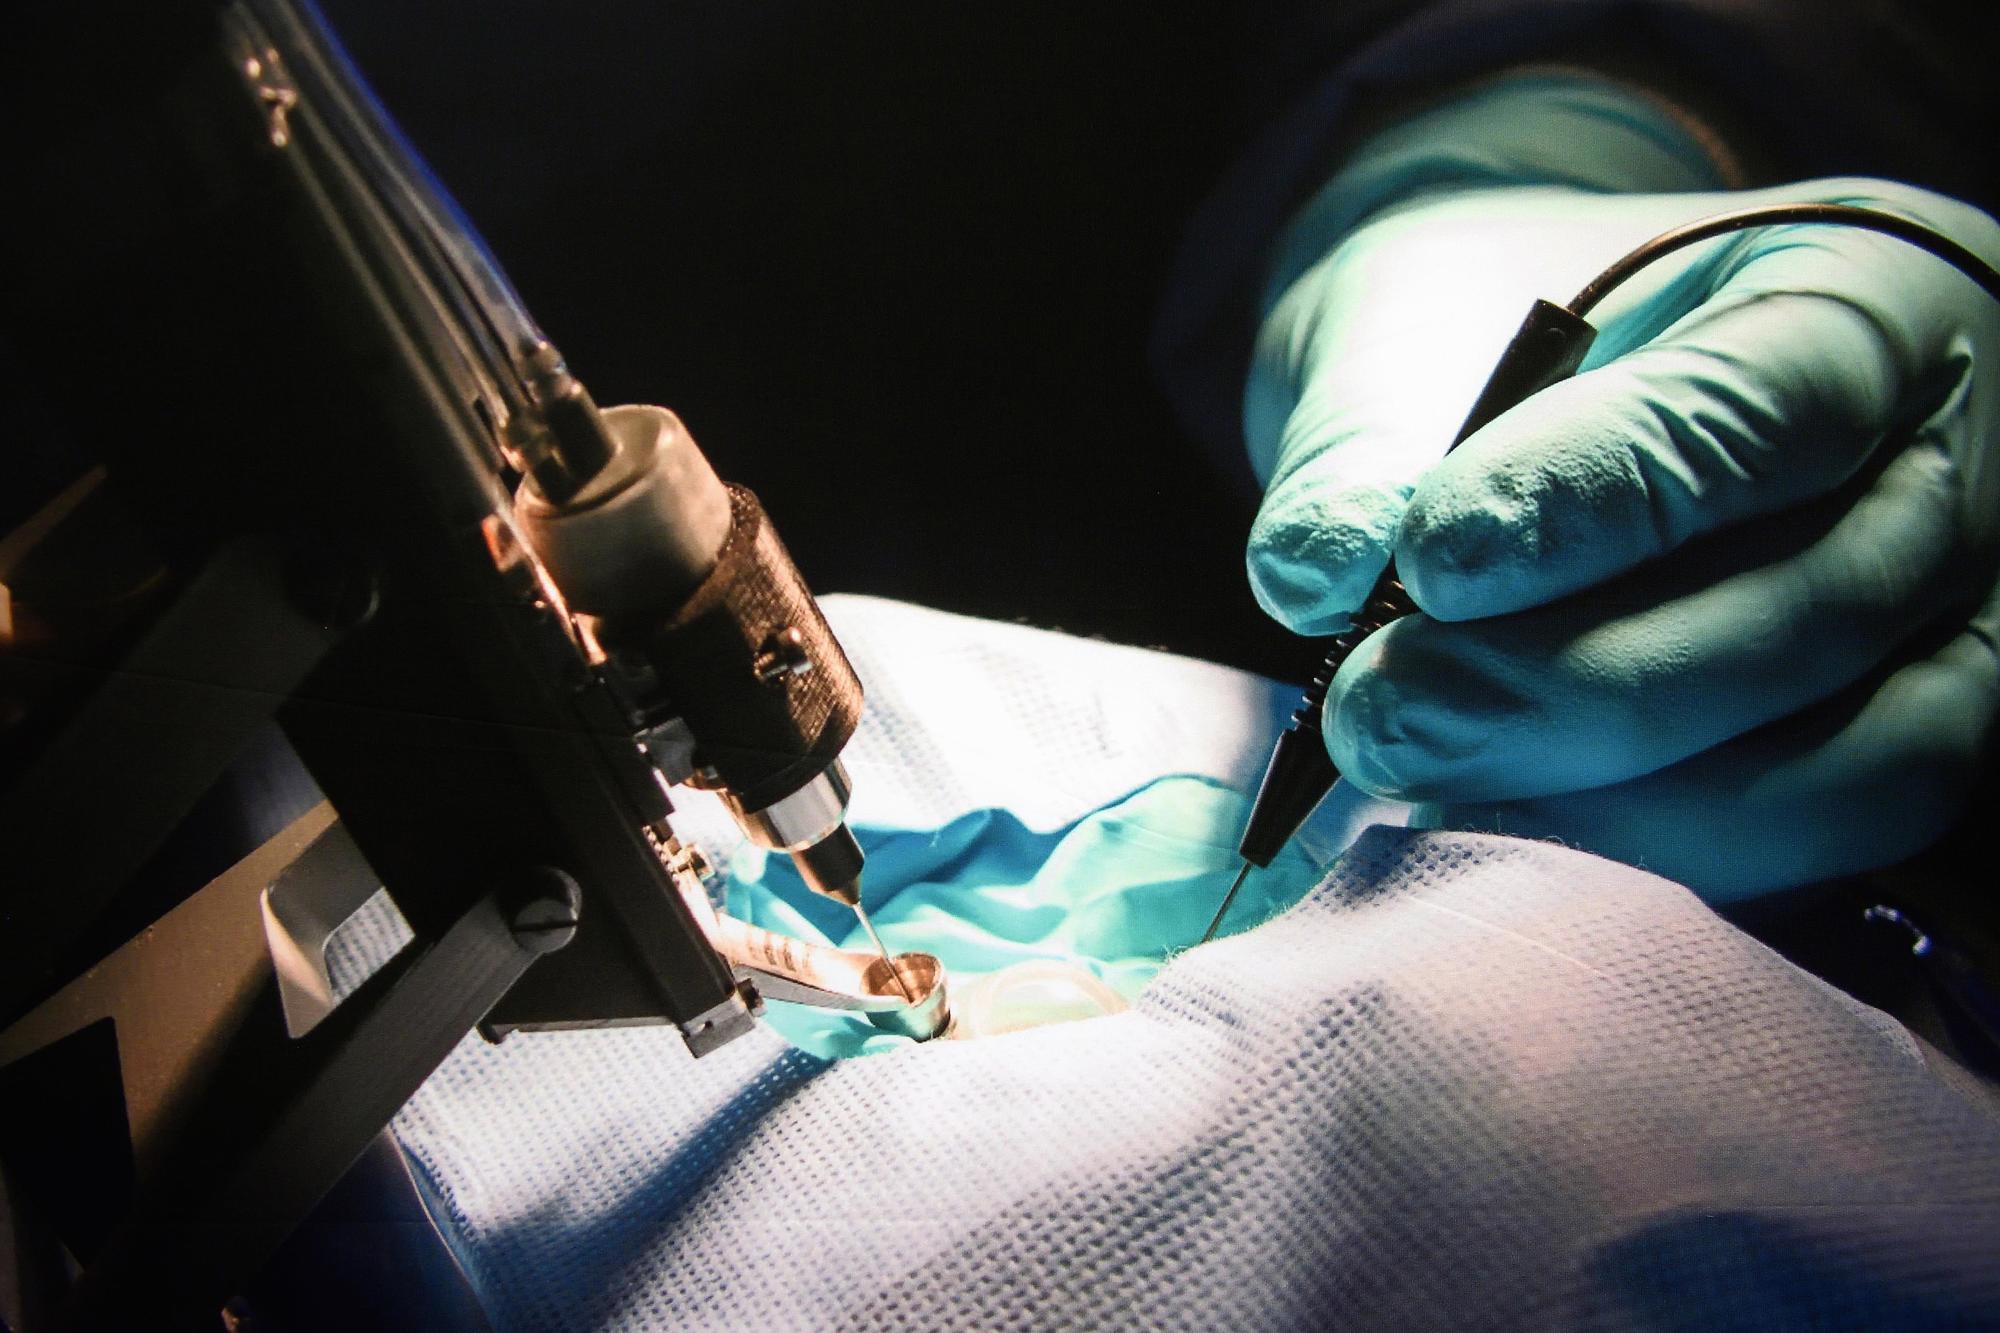 Preceyes develops surgical robots